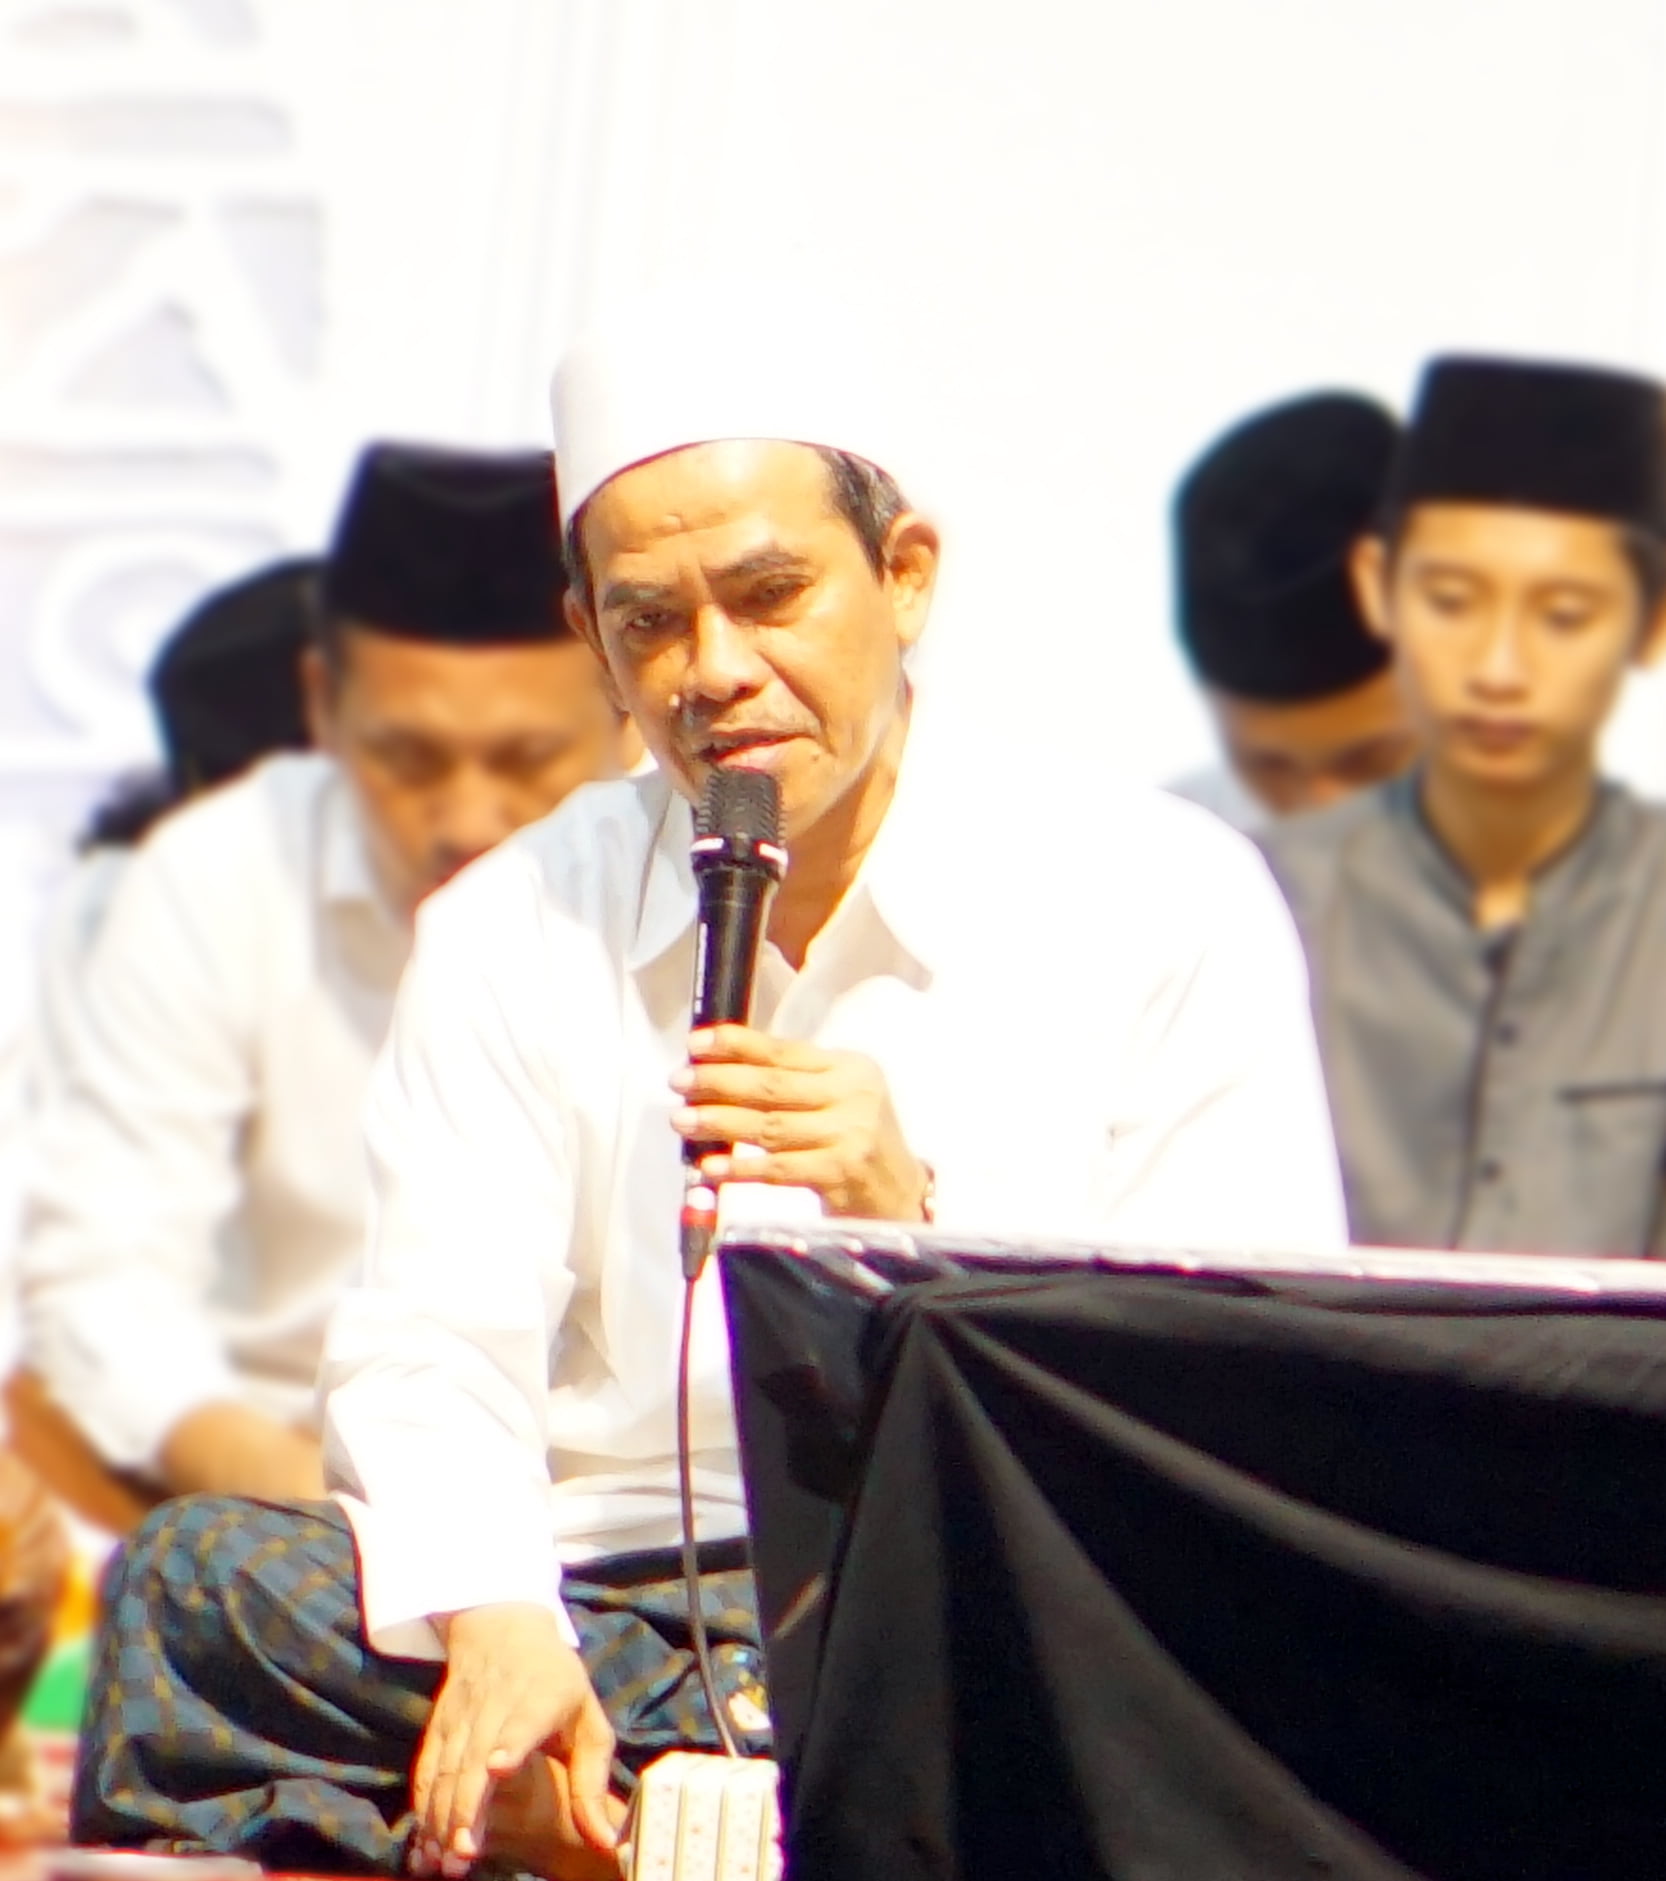 Harlah Pondok Pesantren Al-Munawwir, KHR. Abdul Hamid AQM: Pentingya memahami esensi al fadhlu lil mubtadi, wa in ahsanal muqtadi